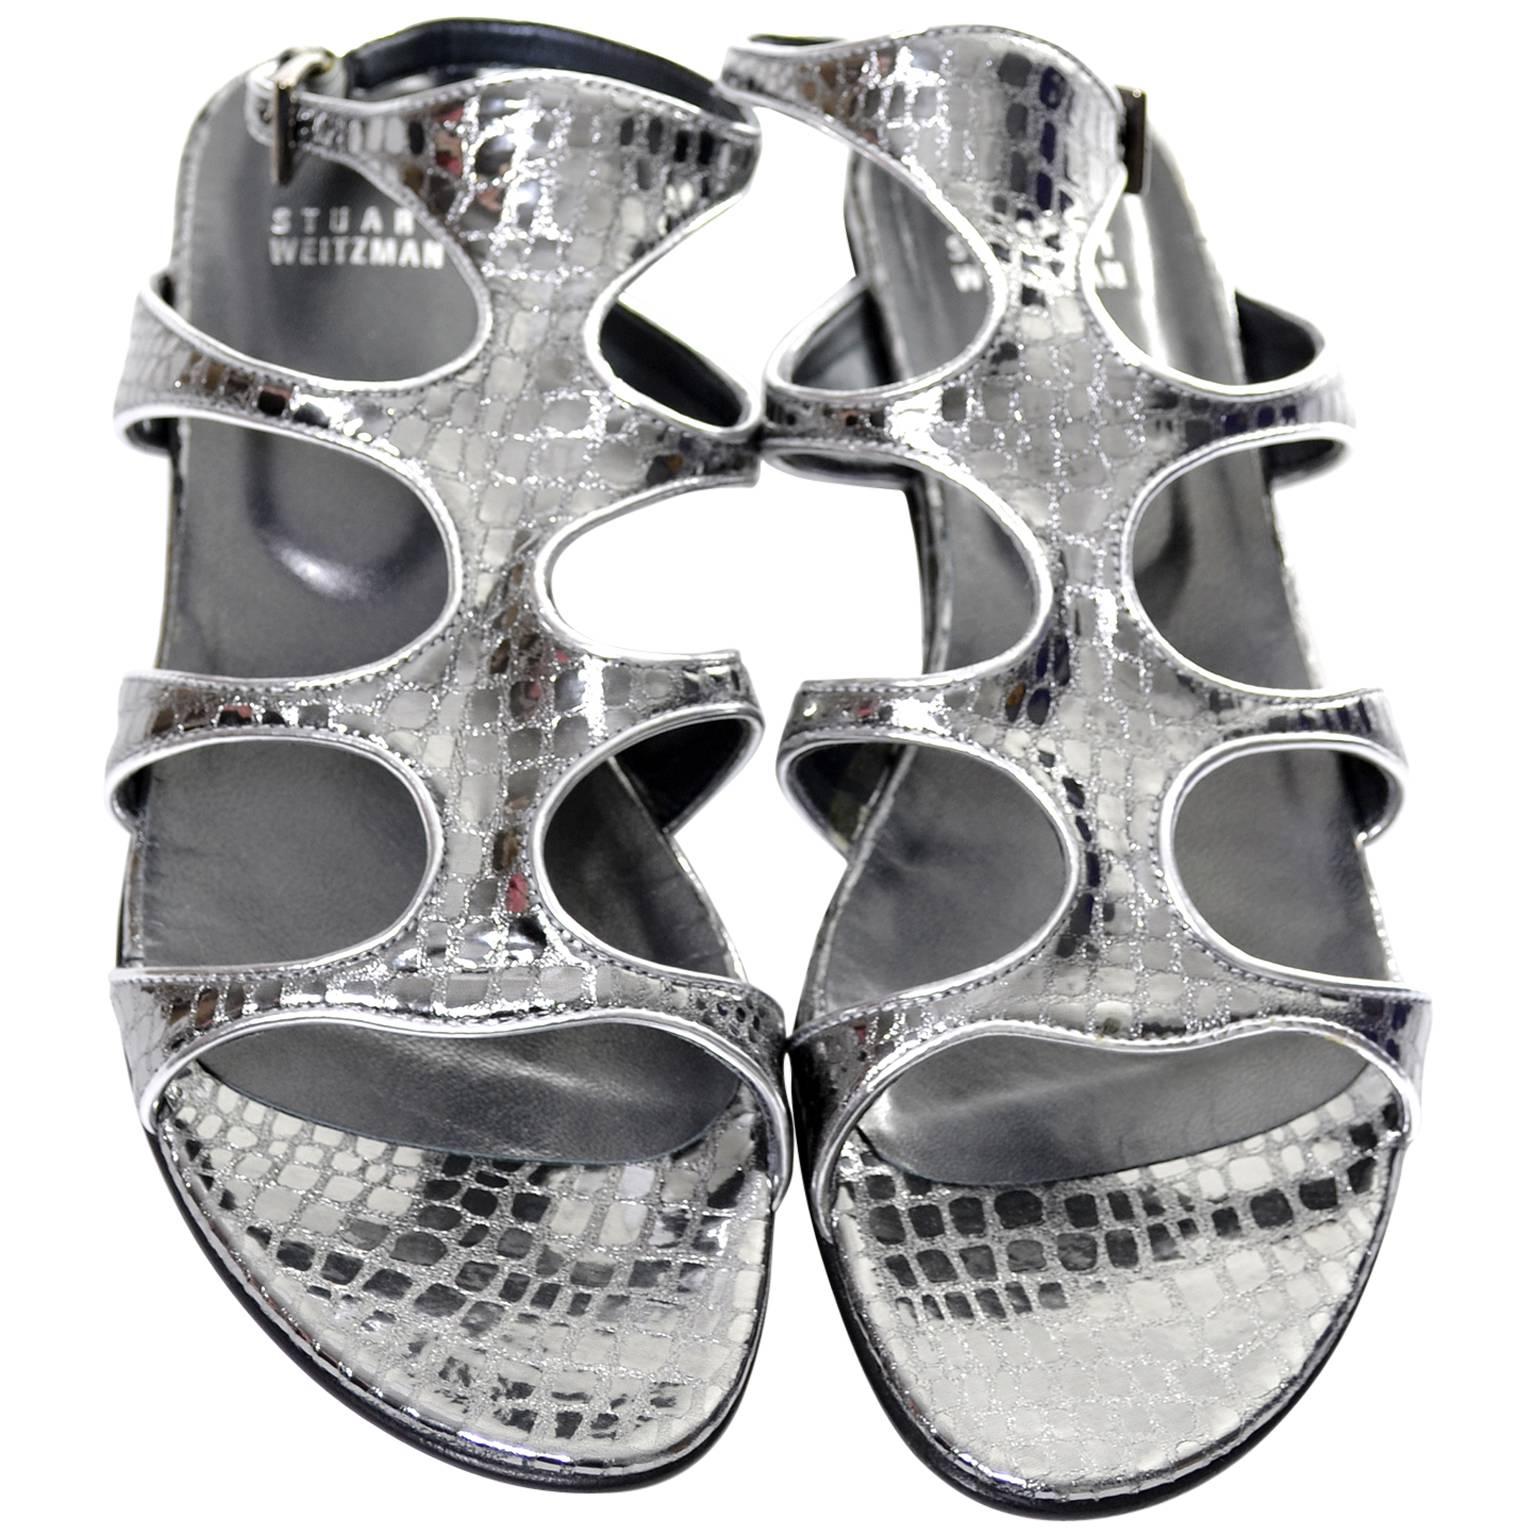 NEW in Box Stuart Weitzman Metallic Alligator Leather Gladio Gladiator Sandals 8